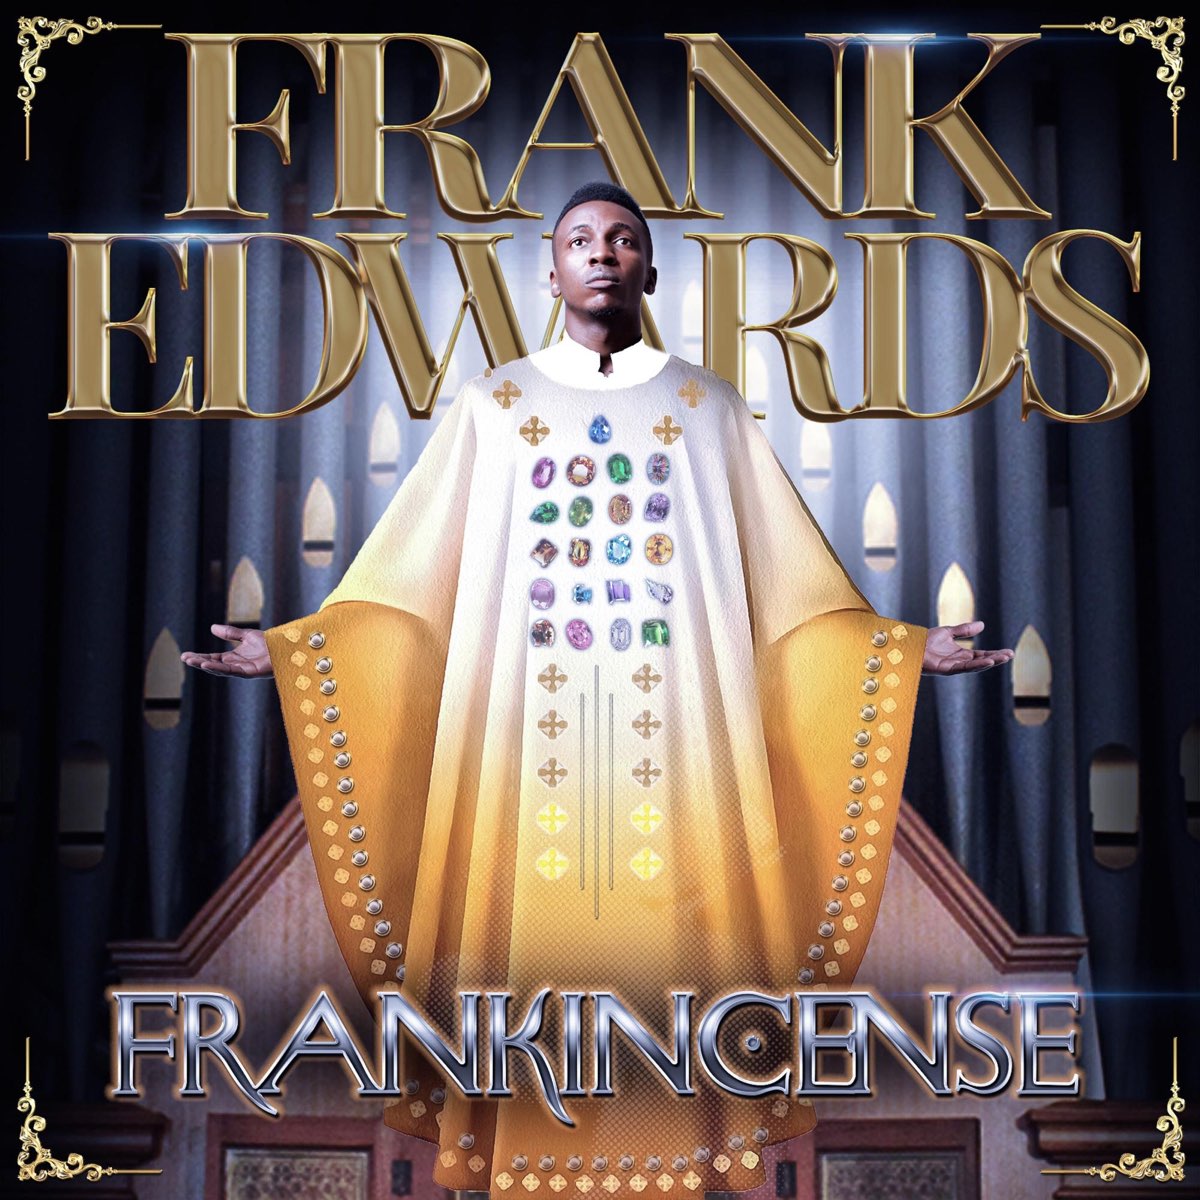 Frankincense by Frank Edwards | Album